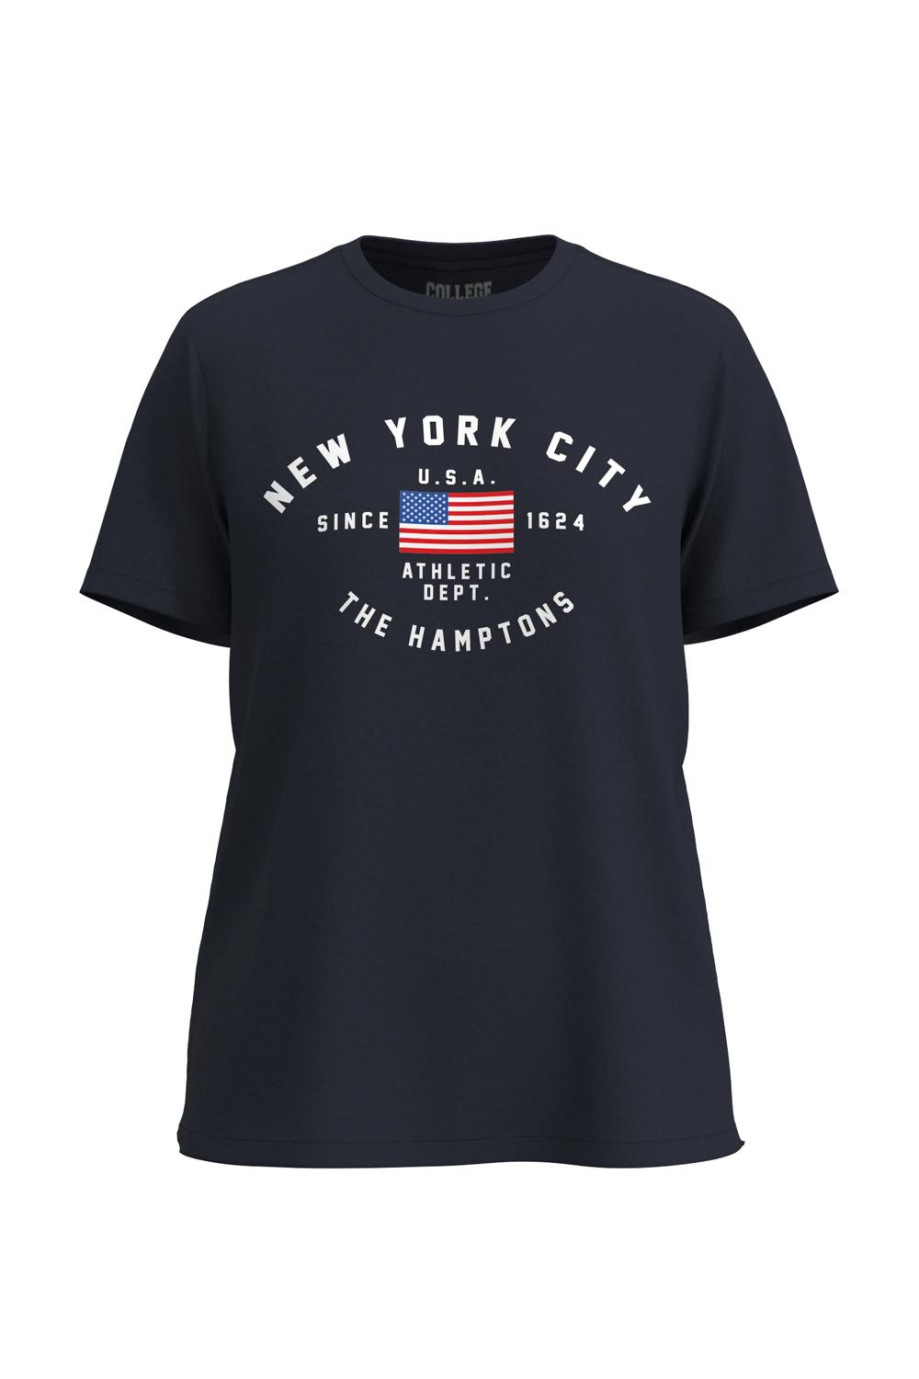 Camiseta manga corta unicolor con texto college de New York